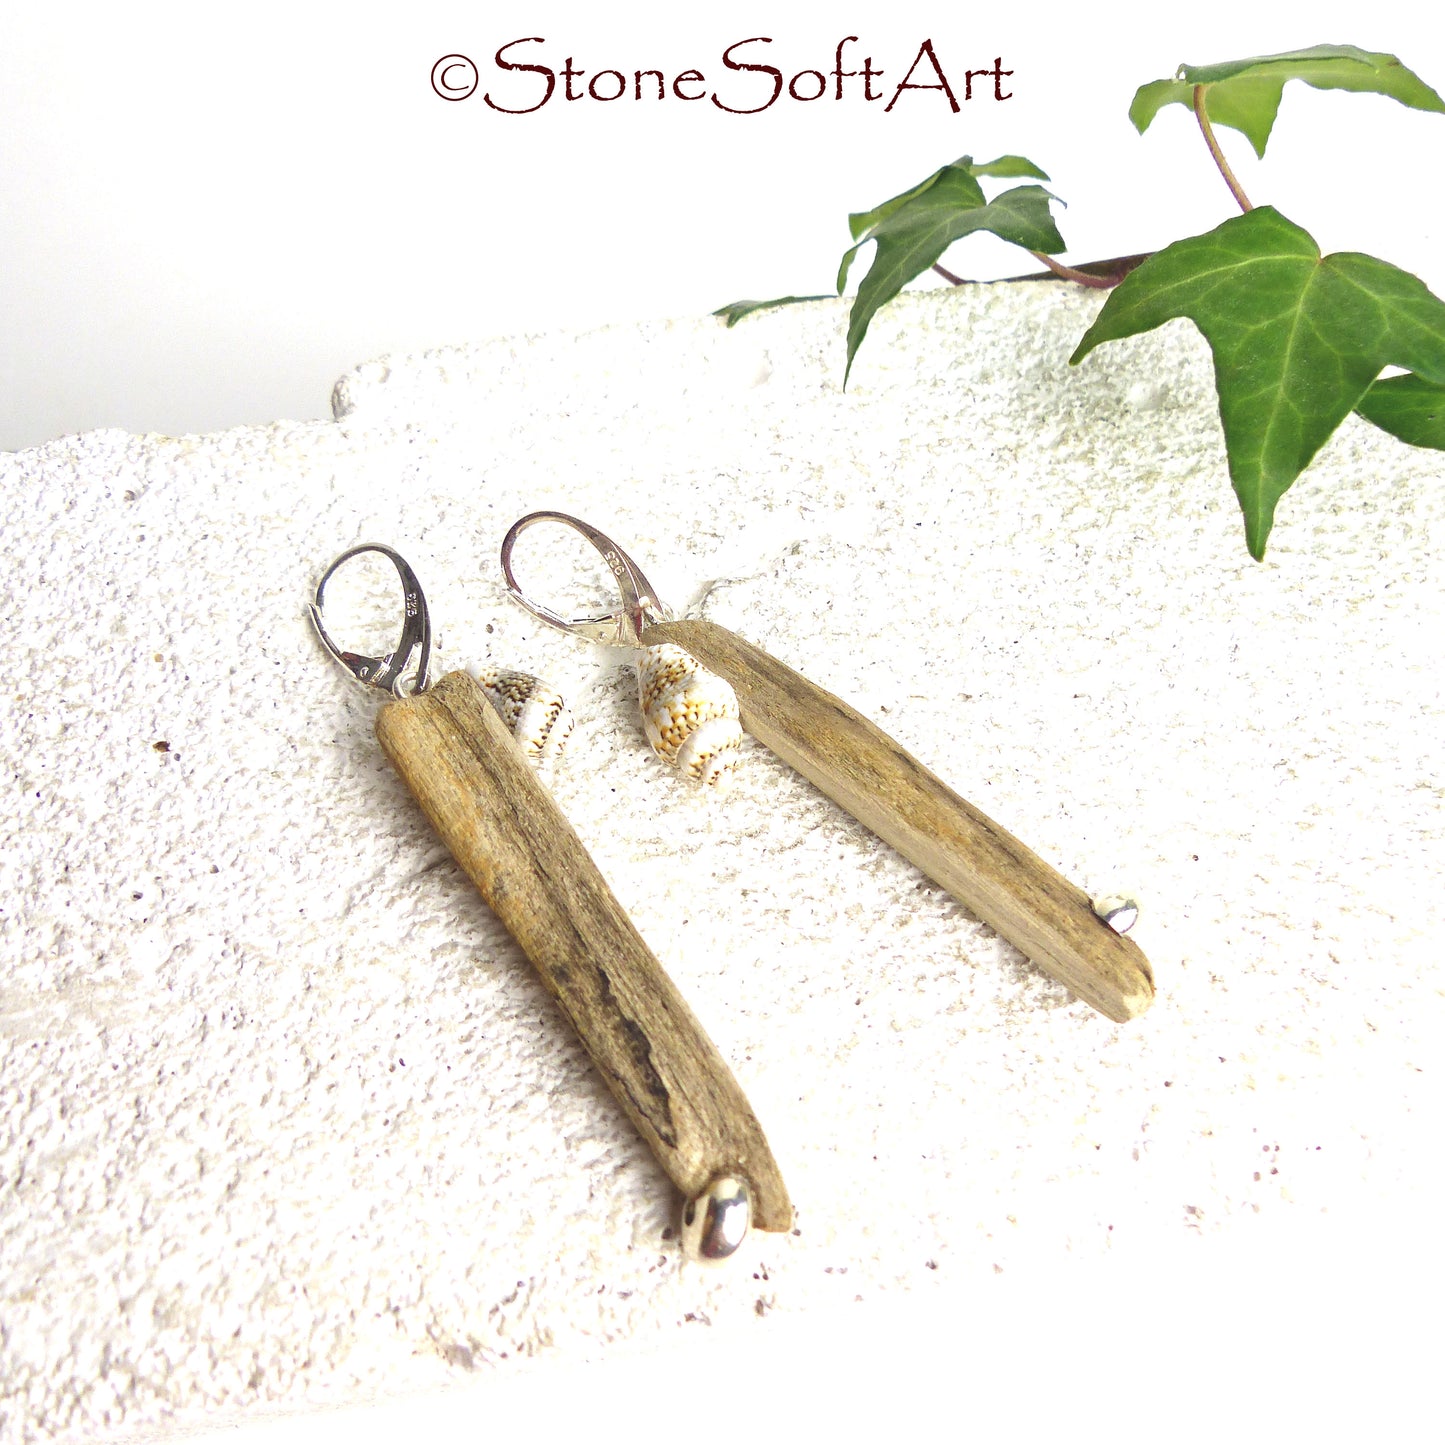 Driftwood Earrings SHANTI with Seashells and 925 Silver, handmade eco friendly gift